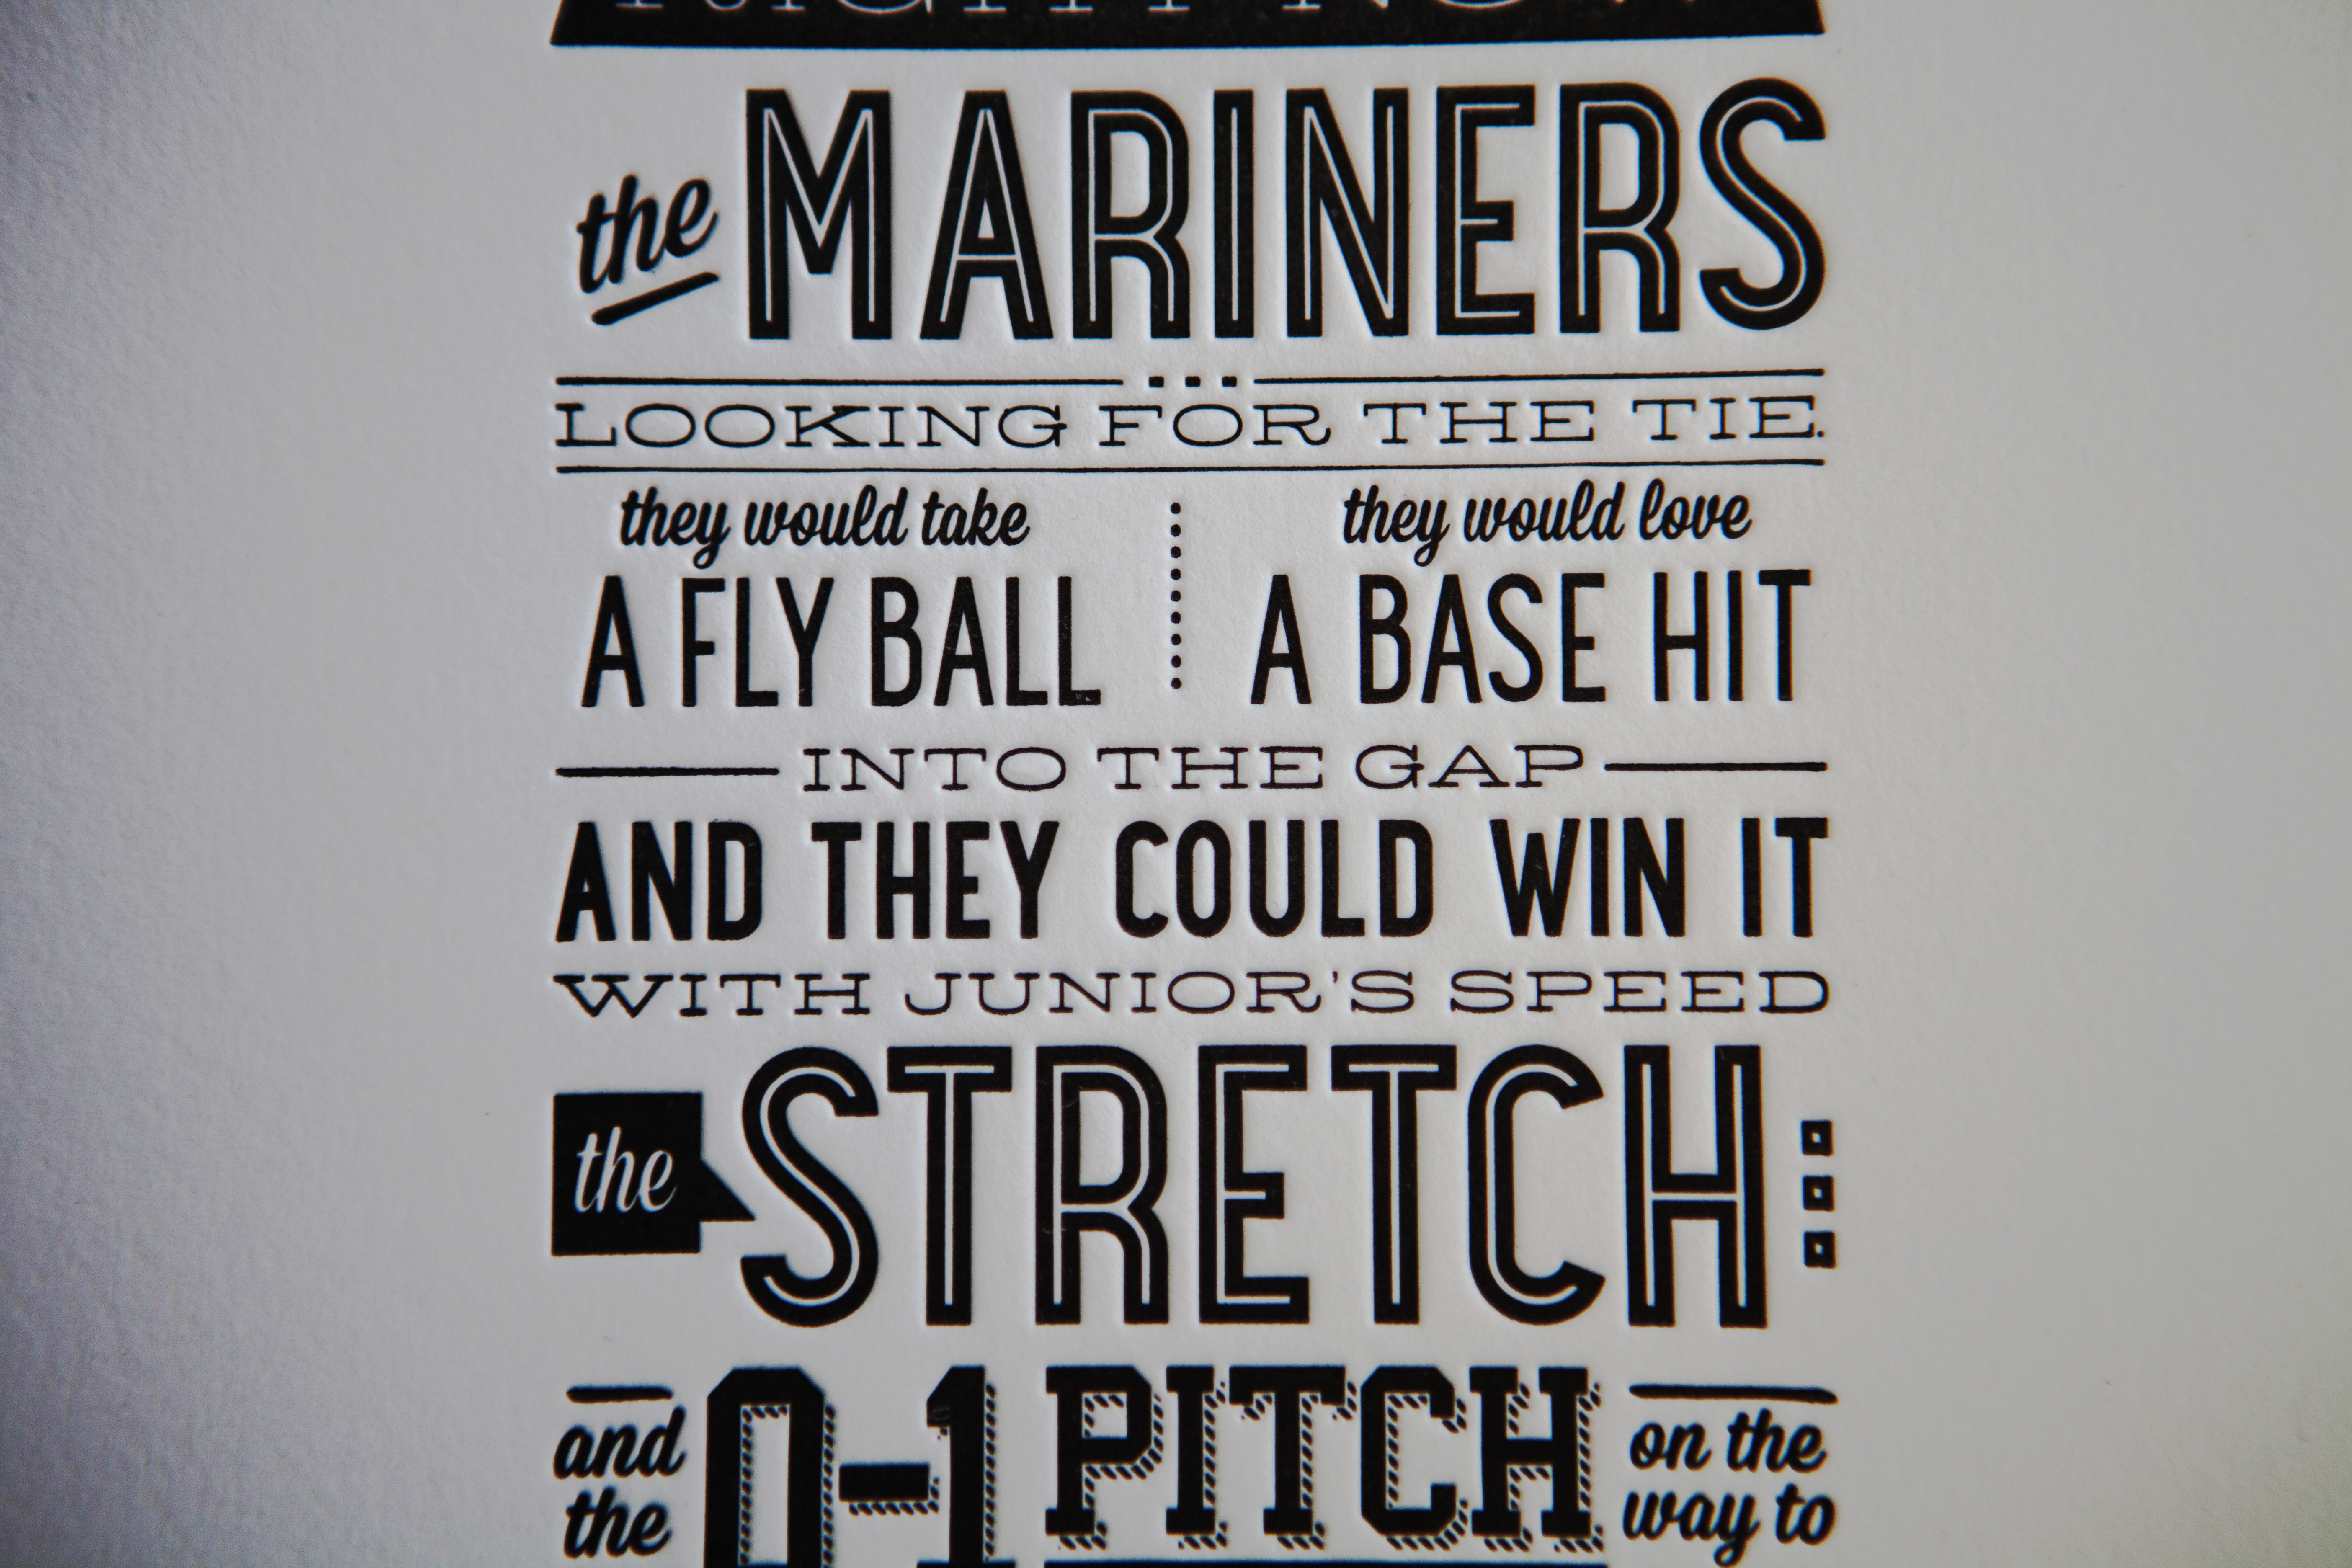 Seattle Mariners Mlb Baseball Wallpaper Background